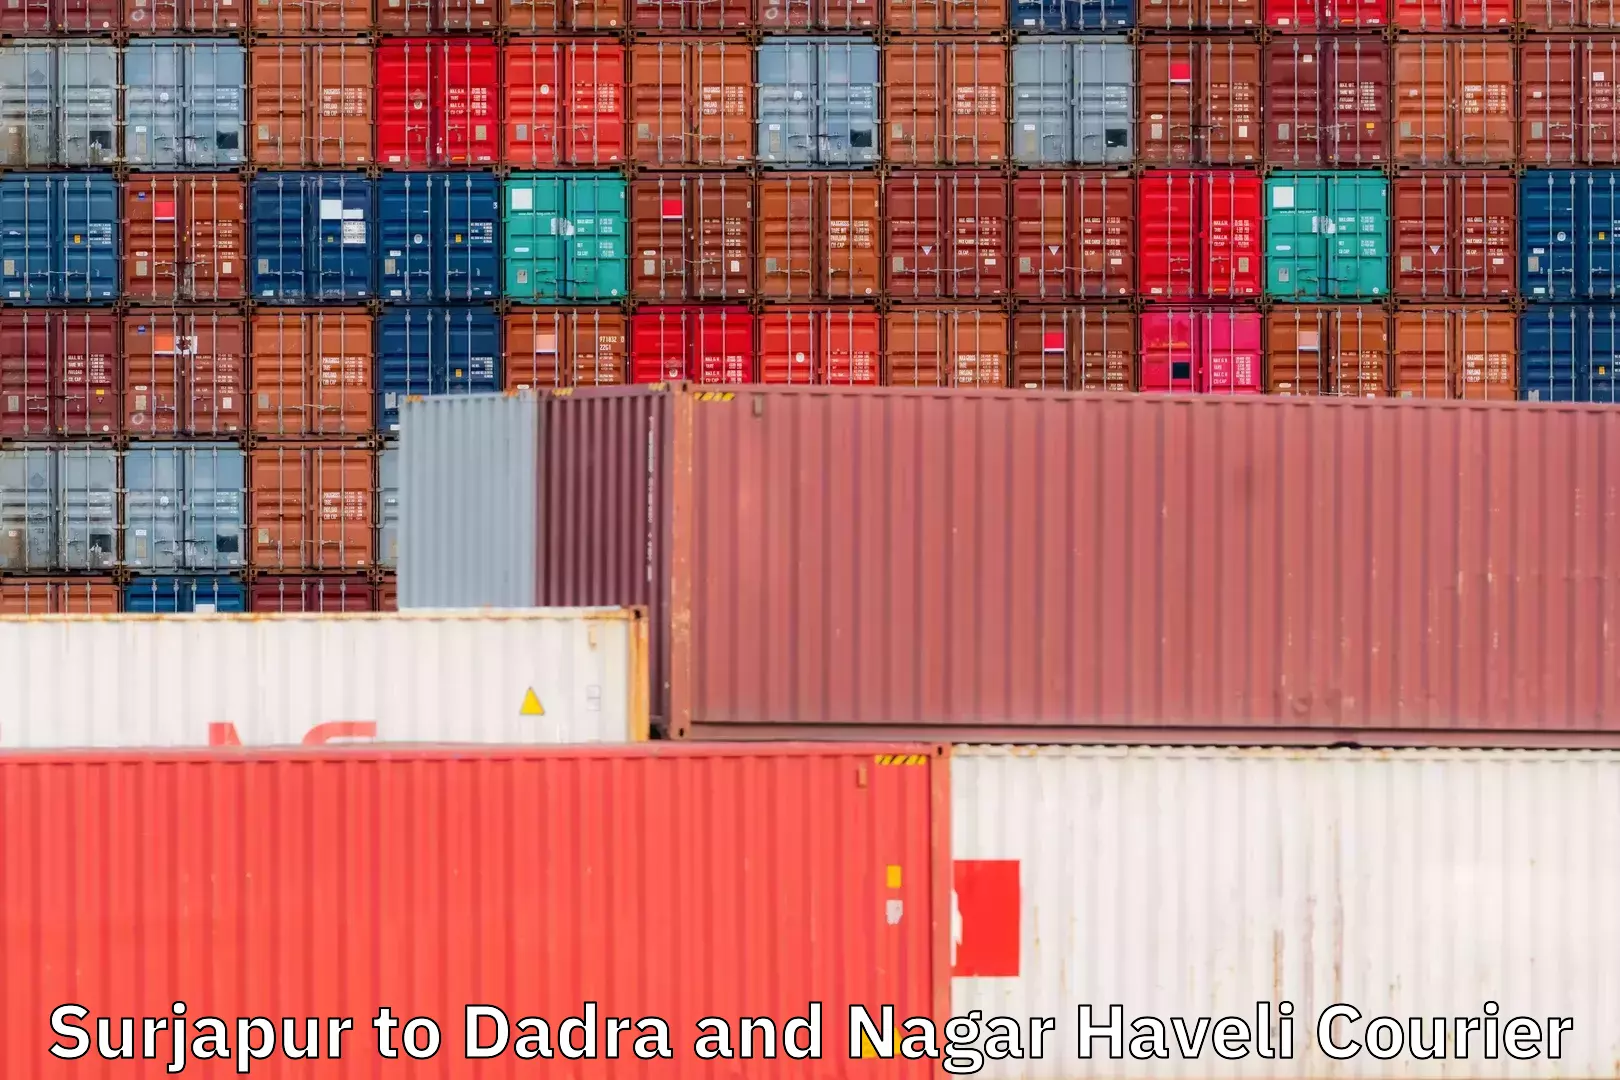 Comprehensive shipping strategies Surjapur to Dadra and Nagar Haveli